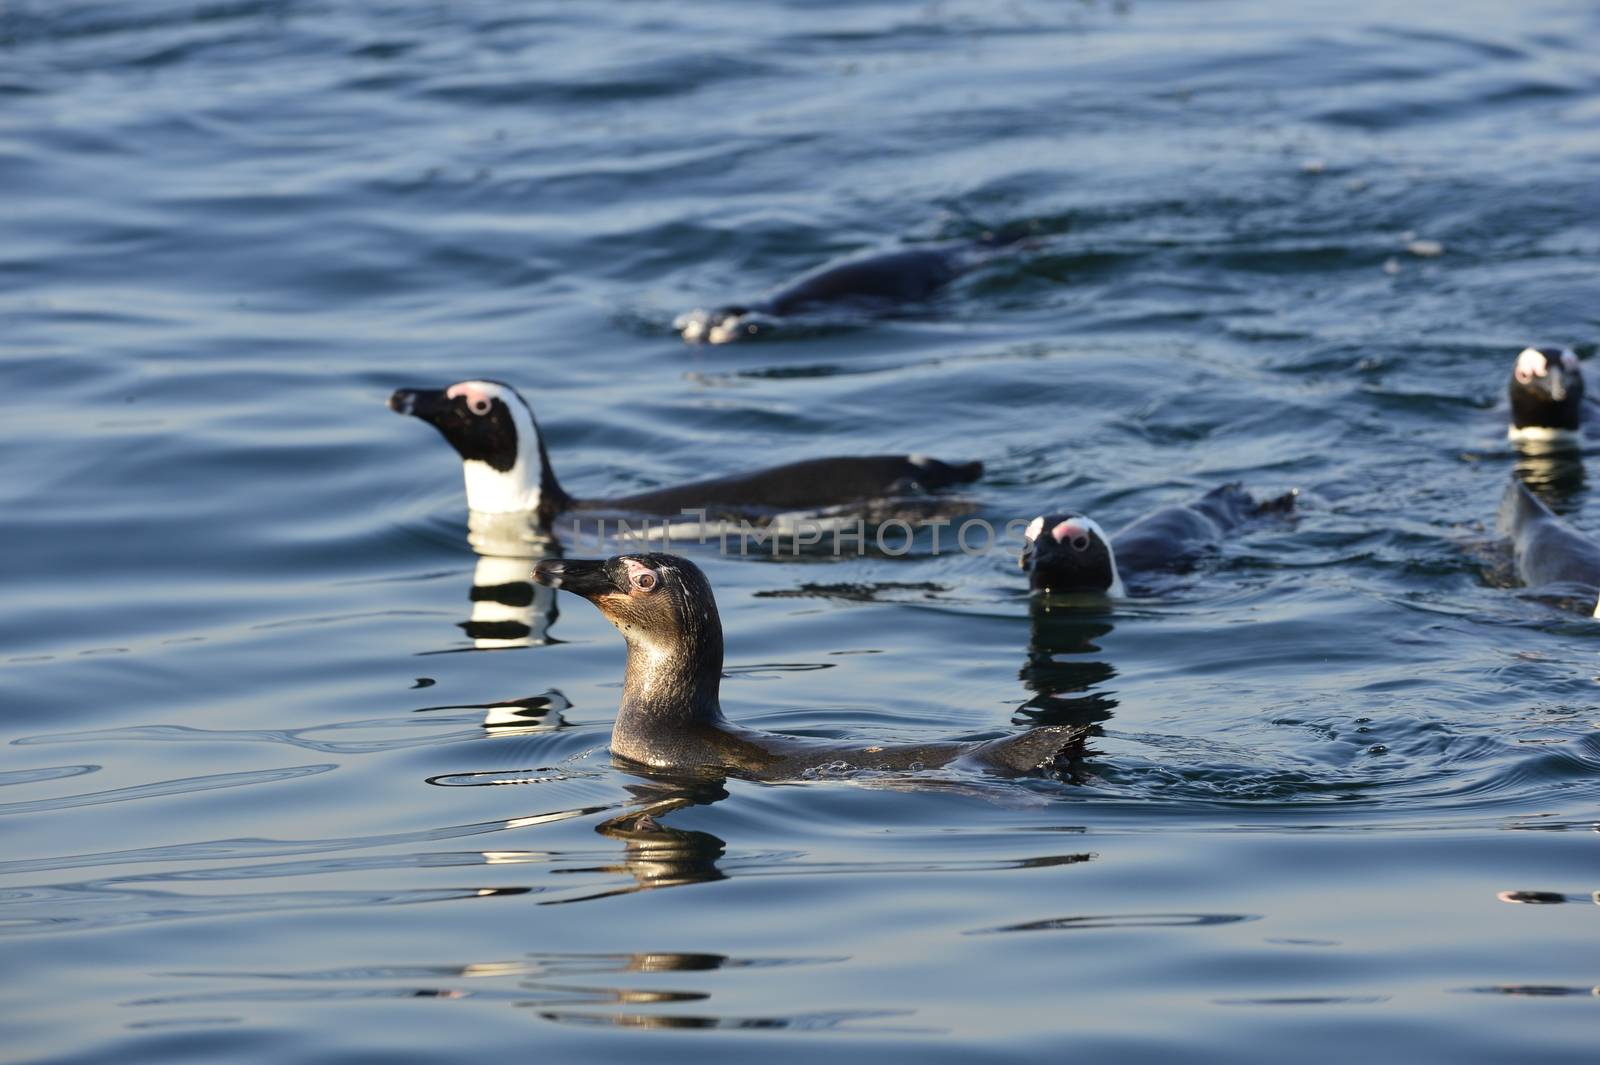 Swimming  African penguin (spheniscus demersus) at the ocean. South Africa